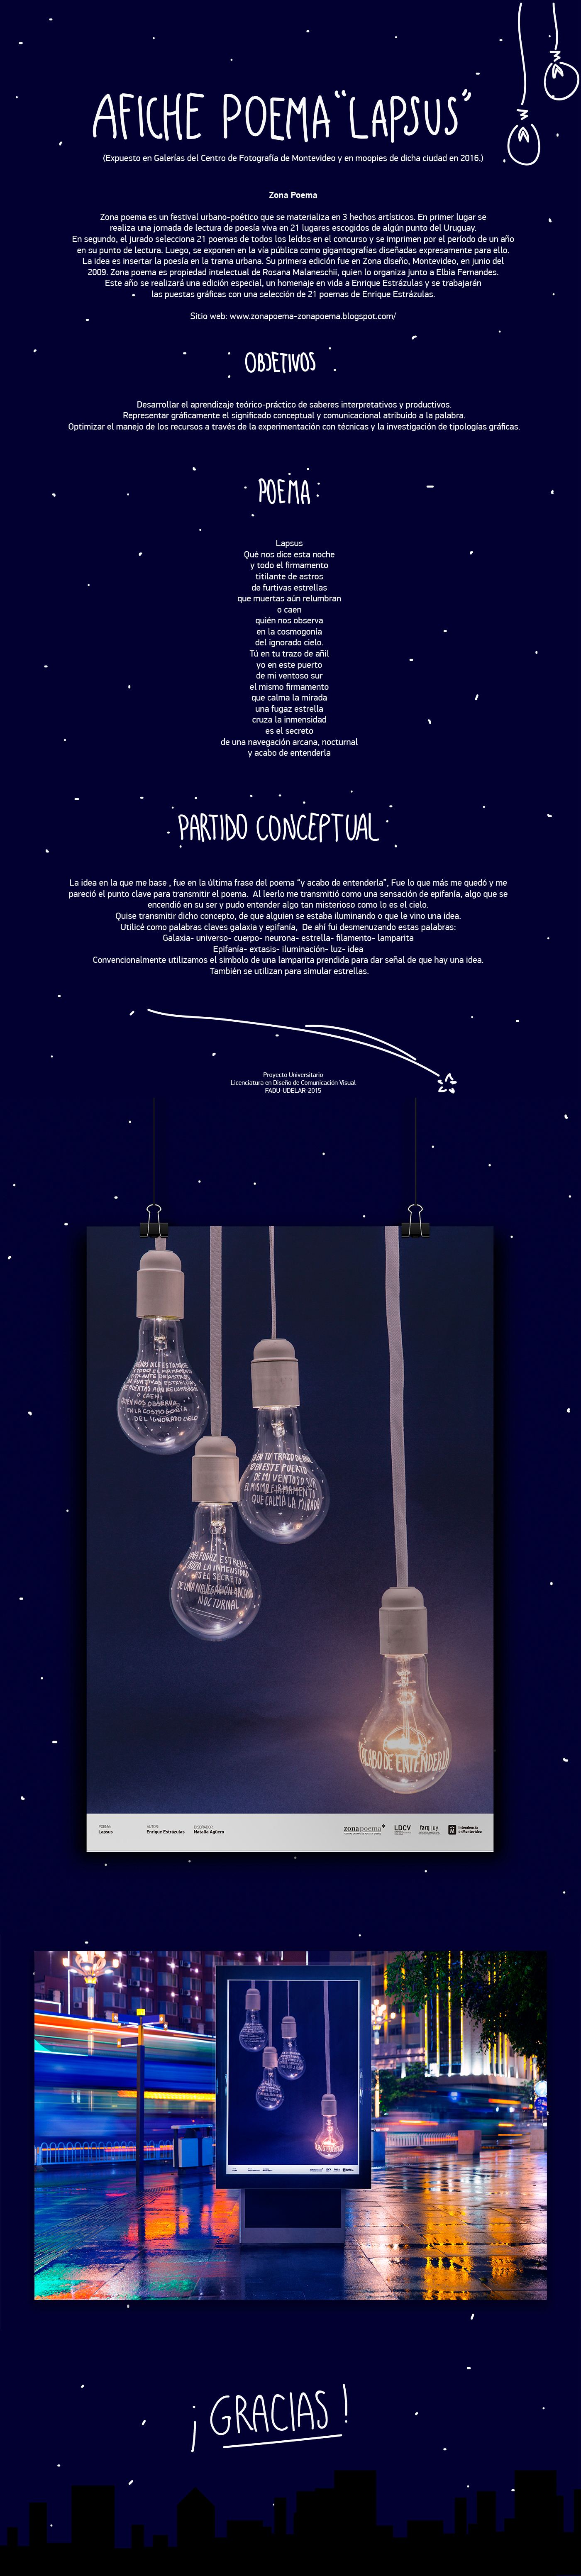 poem poster bulbs light Lapsus